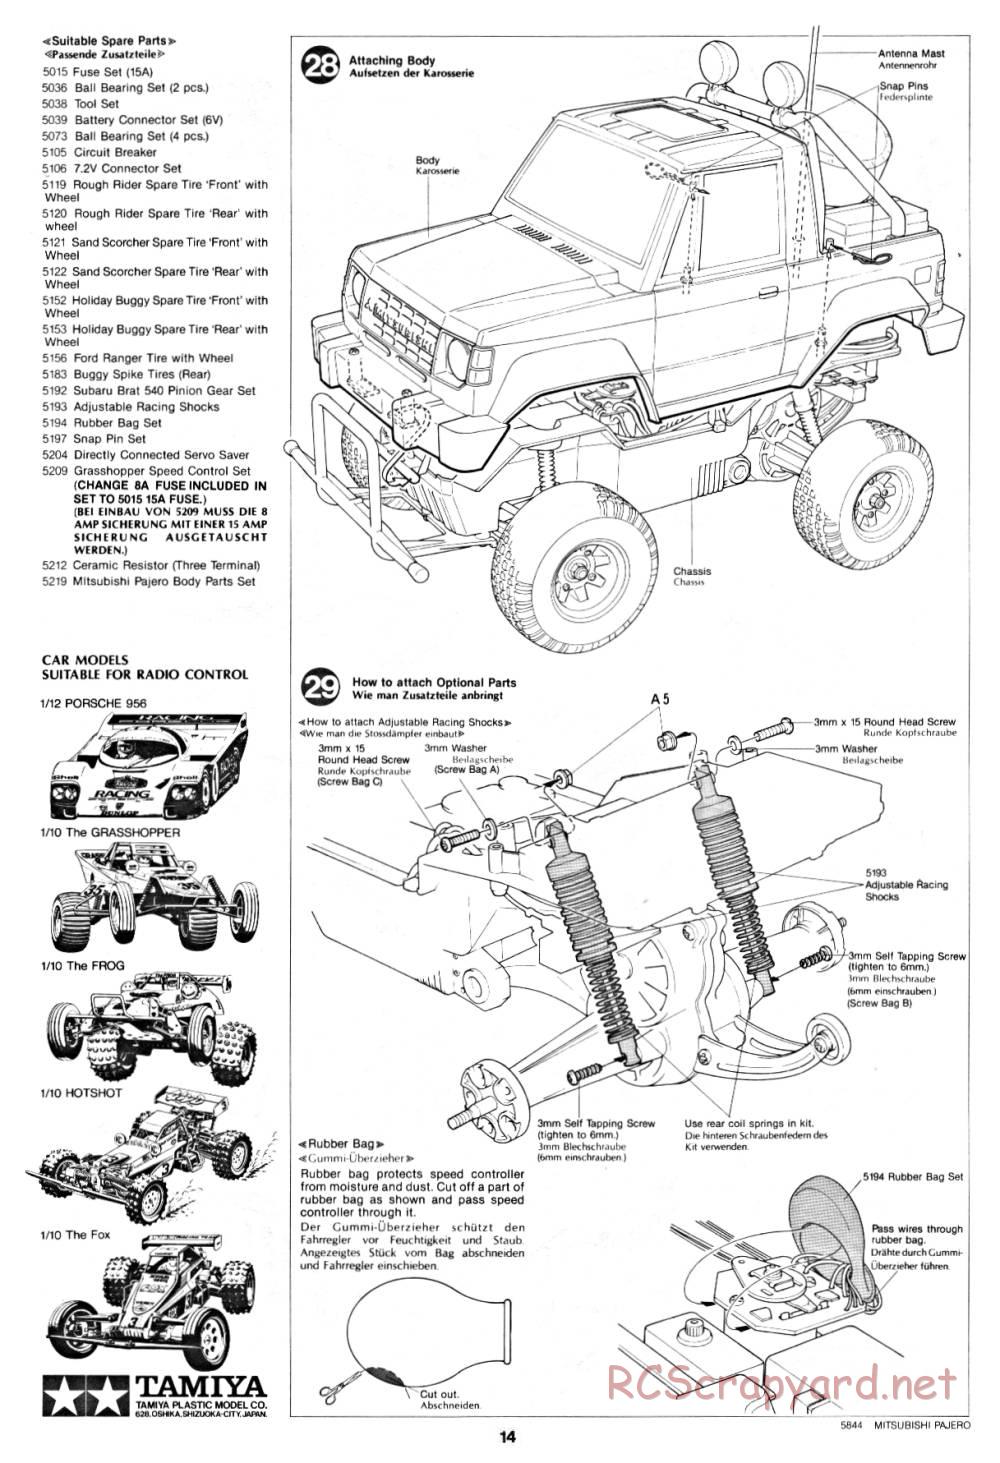 Tamiya - Mitsubishi Pajero - 58044 - Manual - Page 14